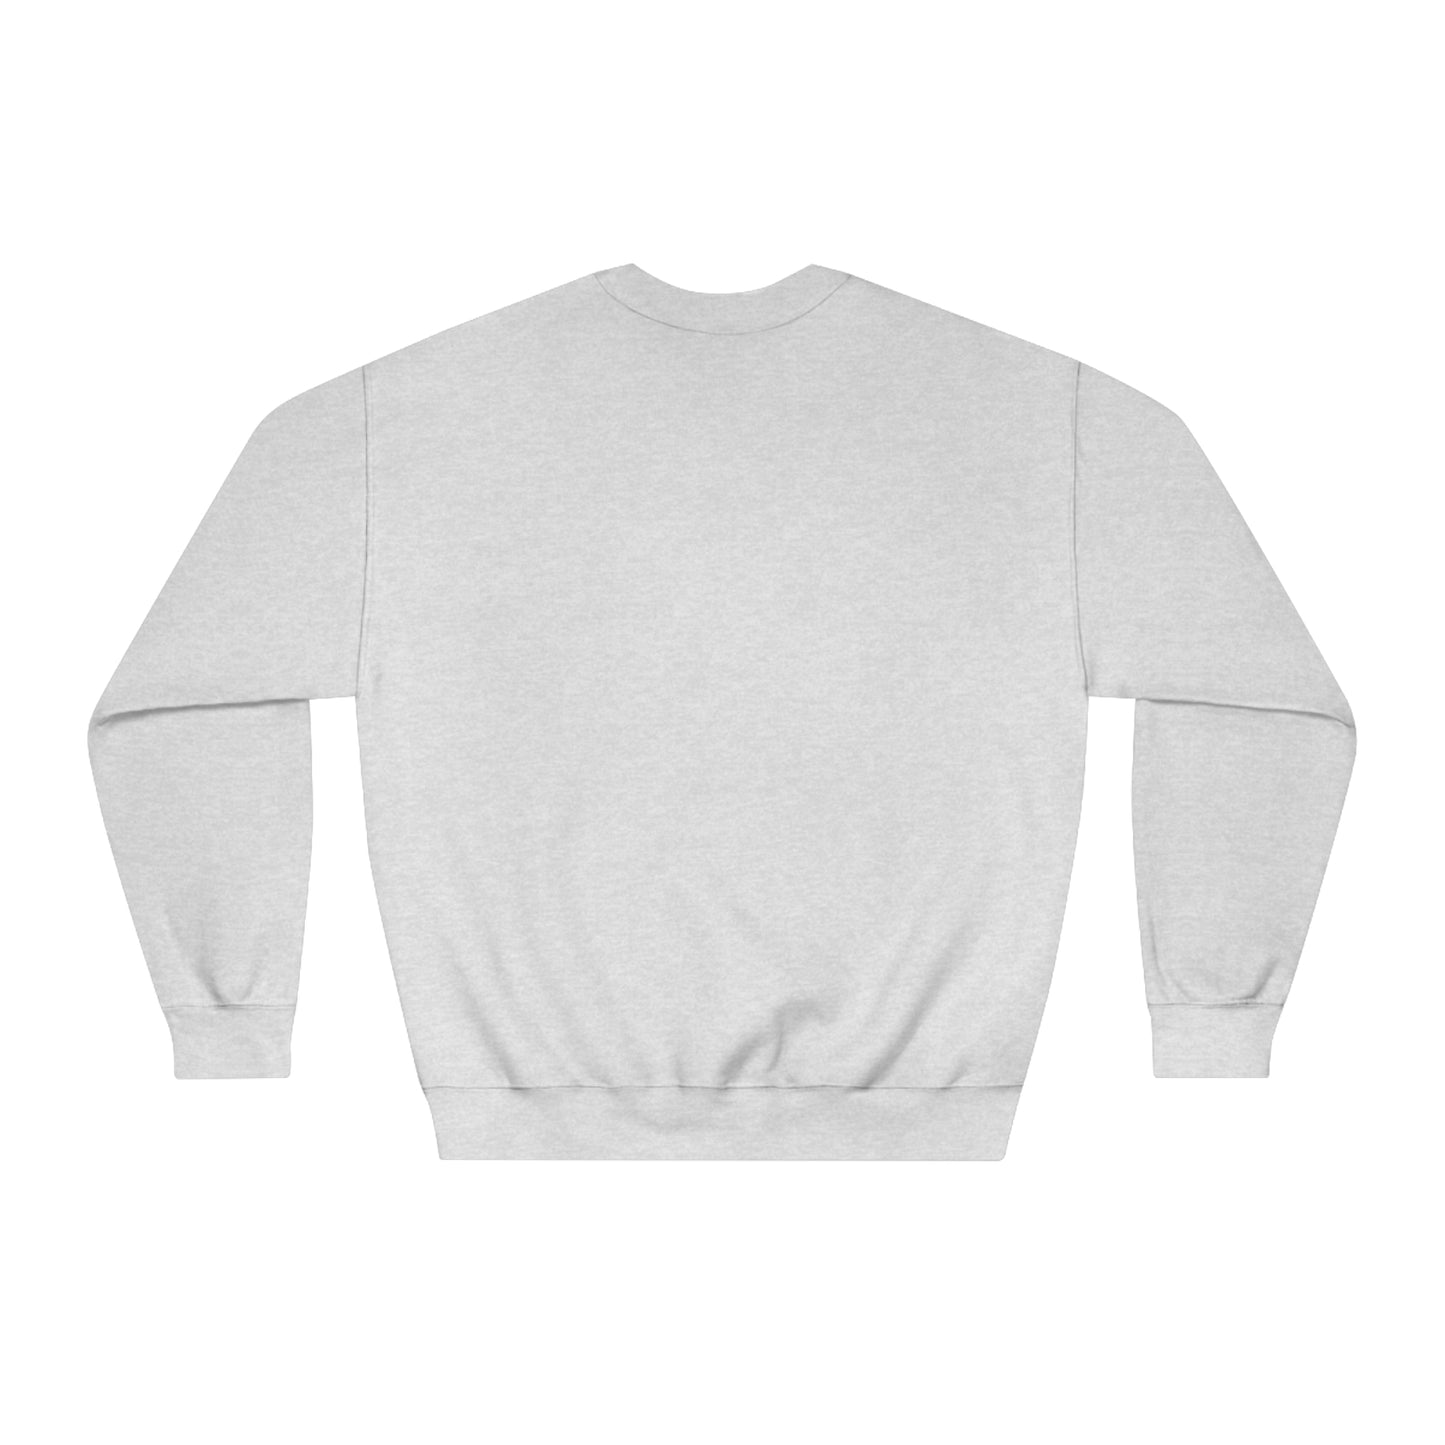 The Sparkle Sweatshirt